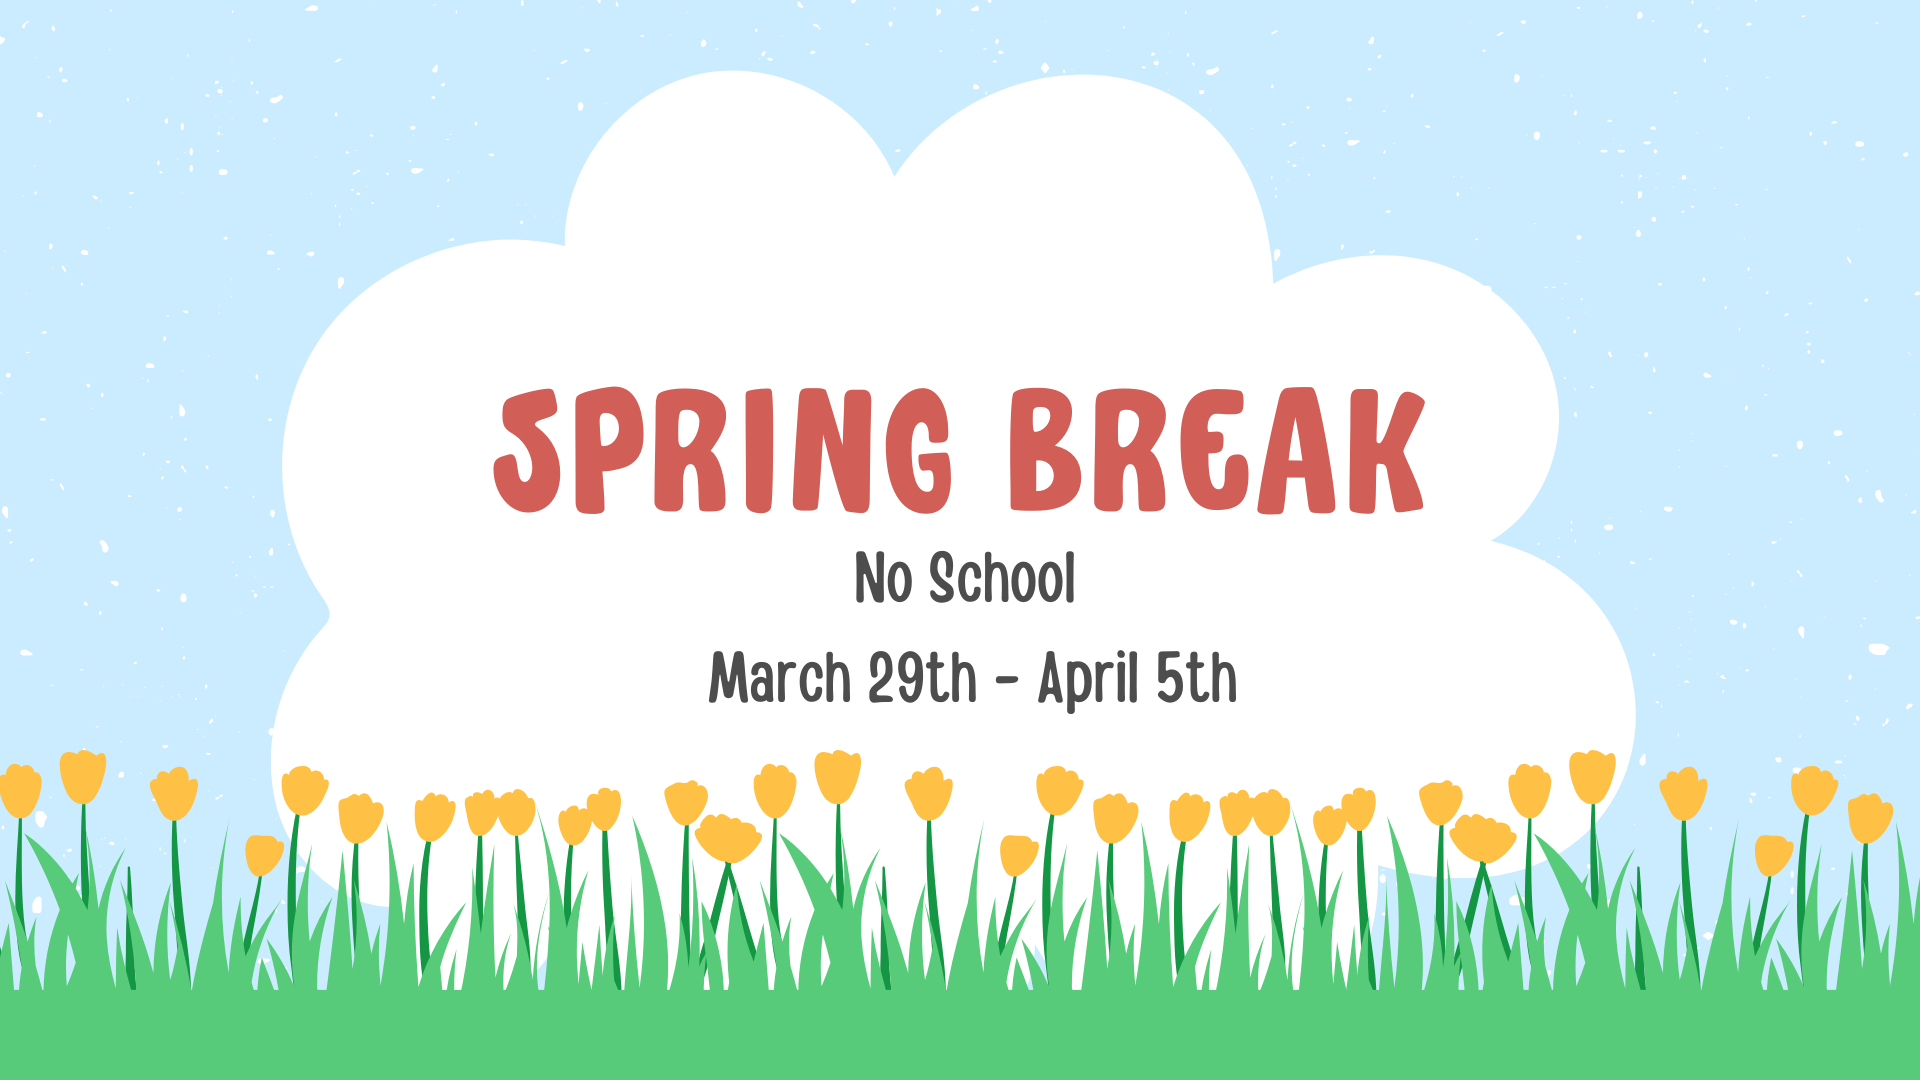 Spring Break, No School, March 29th - April 5th.